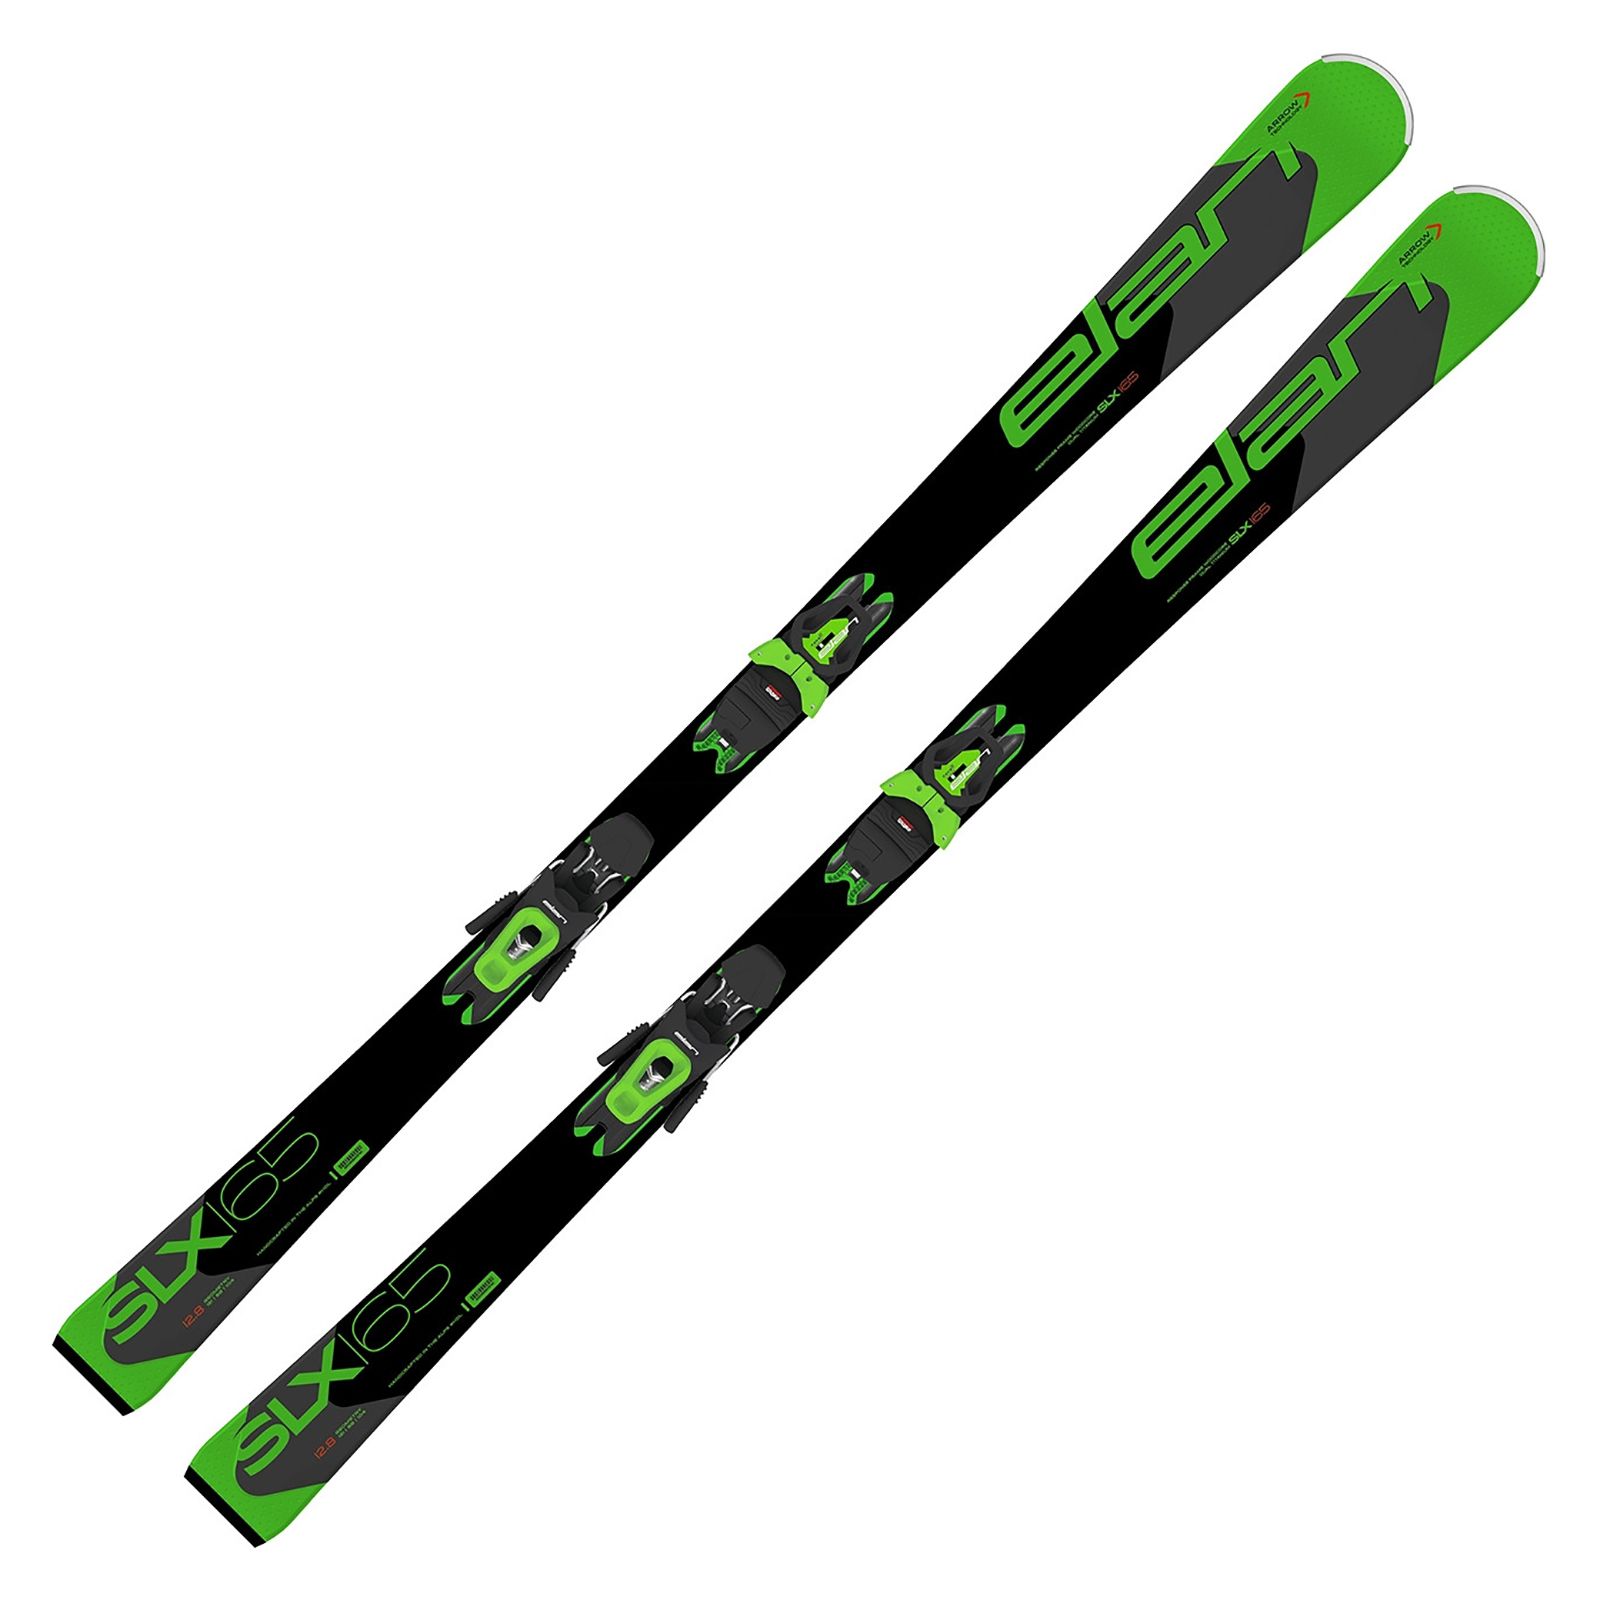 elan SLX Pro AM Power Shift Ski 2020/21